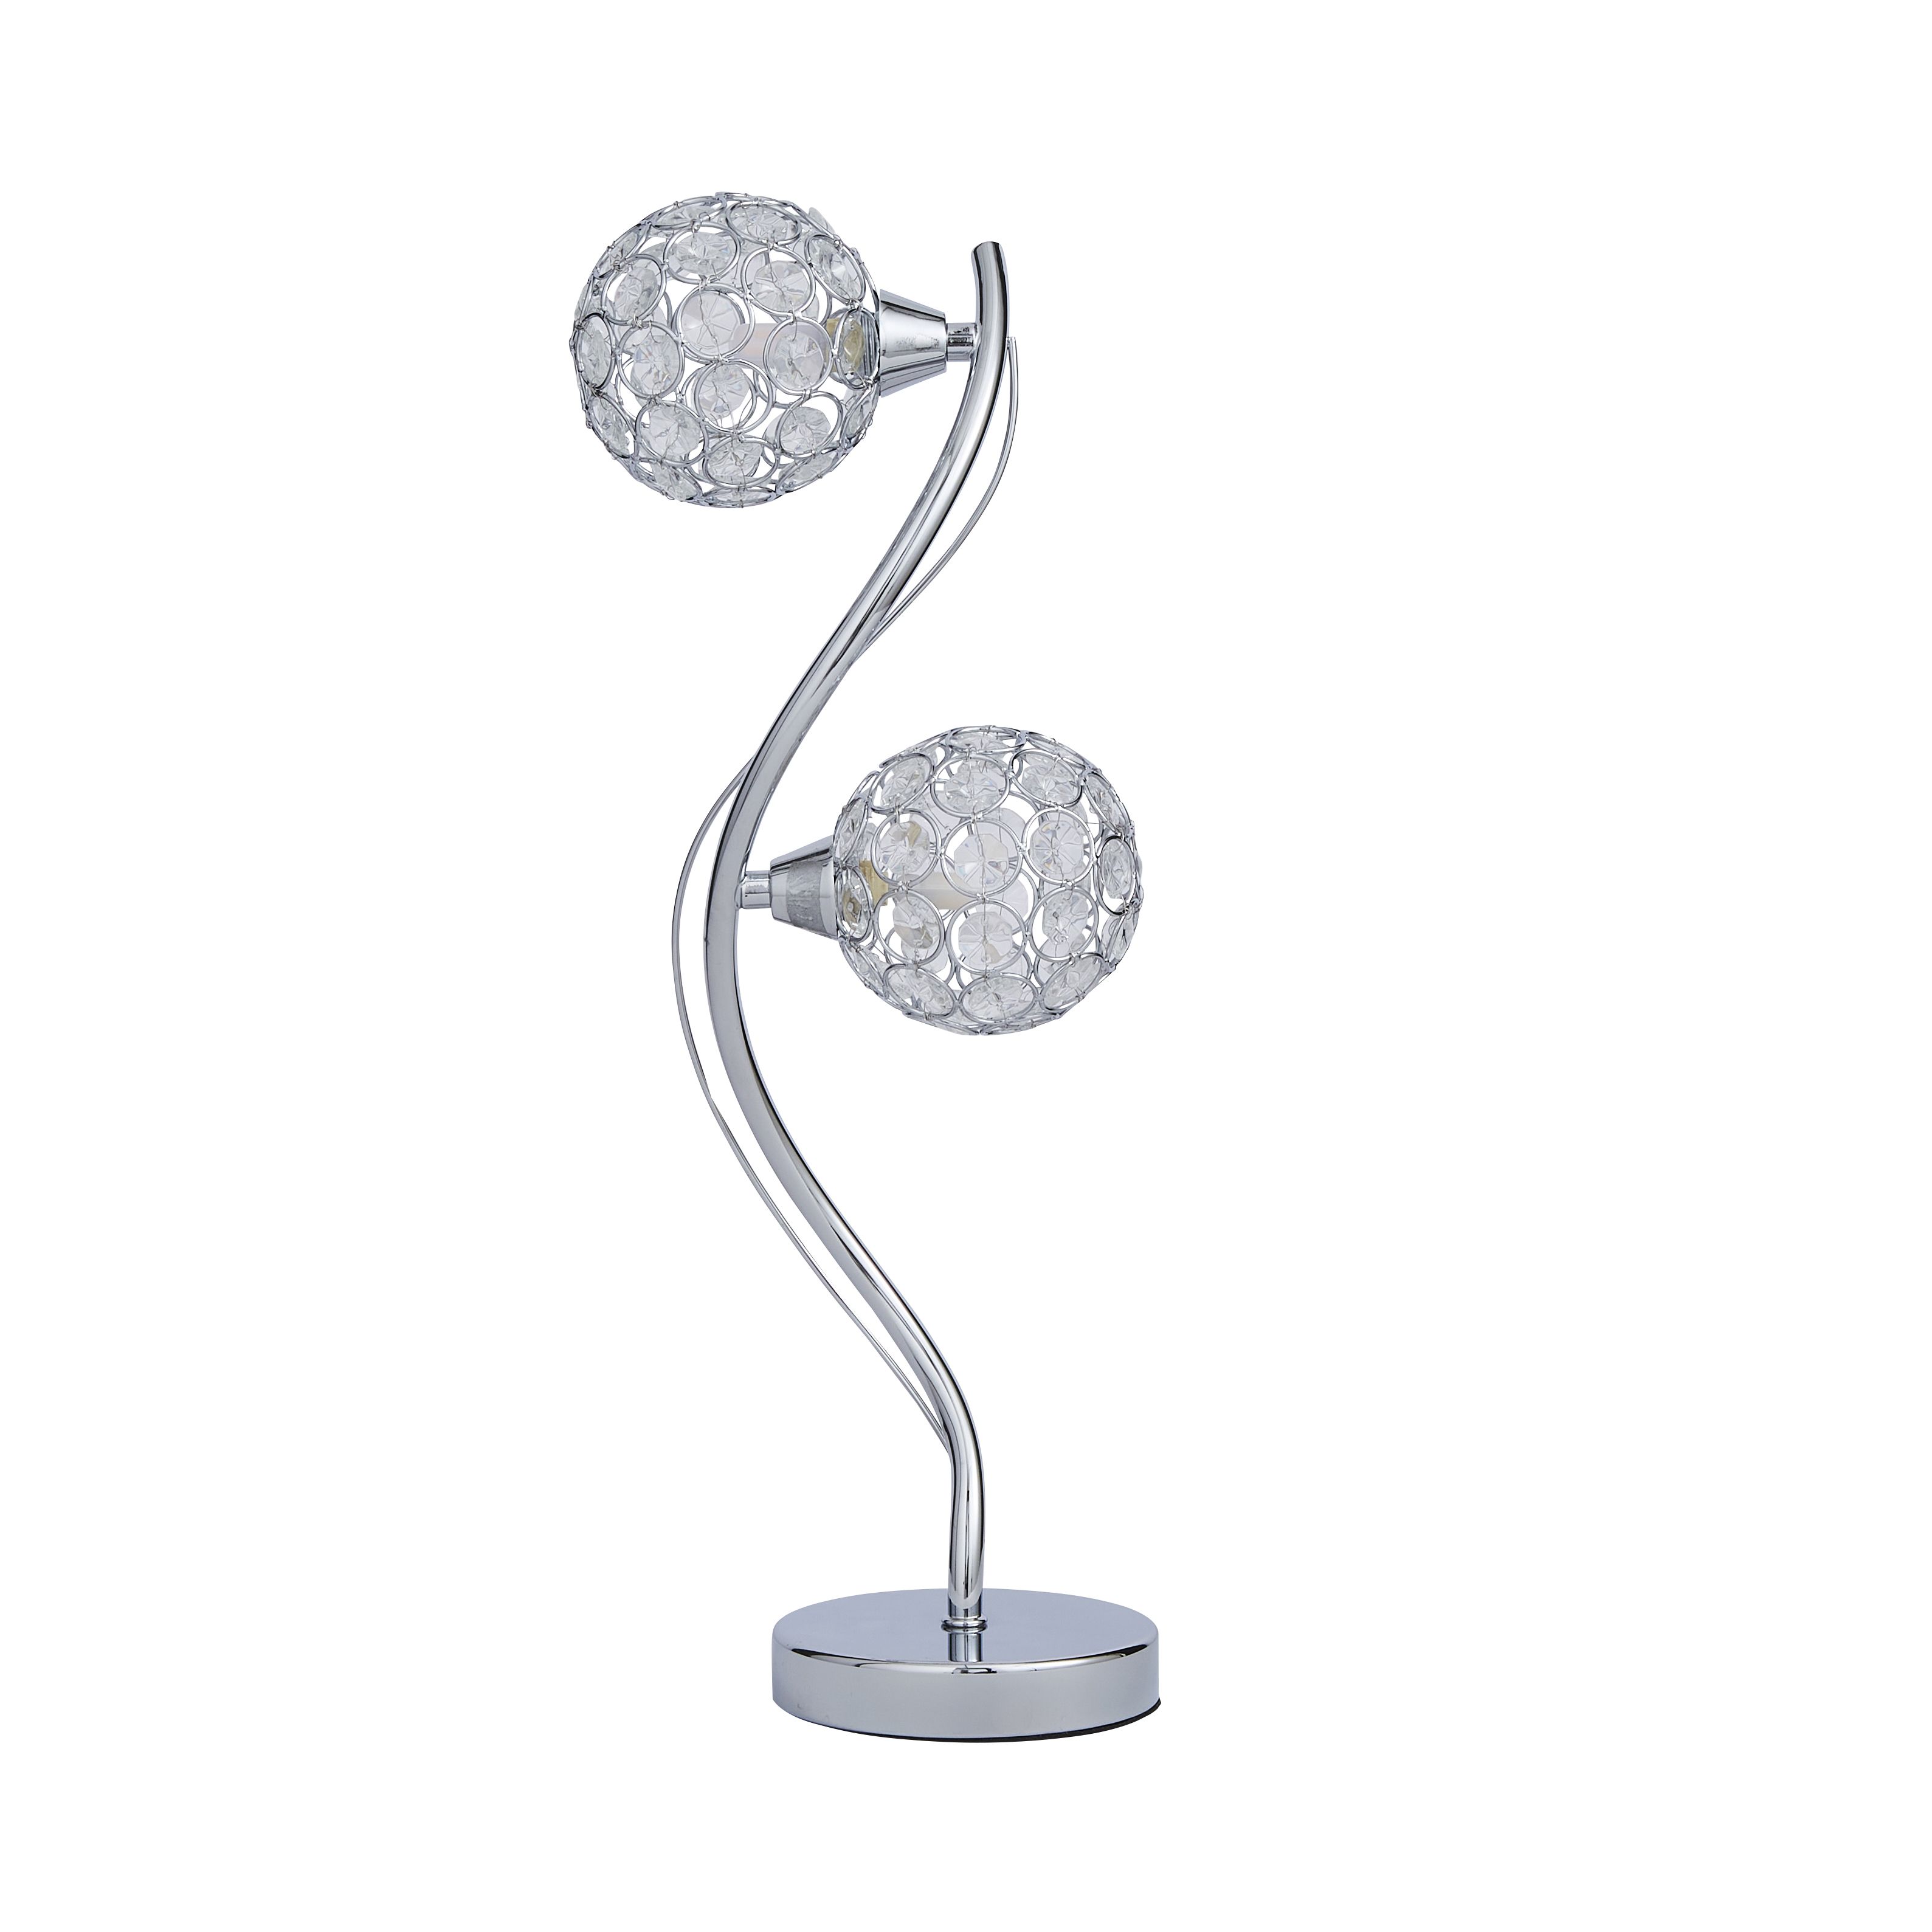 The Lighting Edit Ida Crystal spiral Chrome effect Table lamp